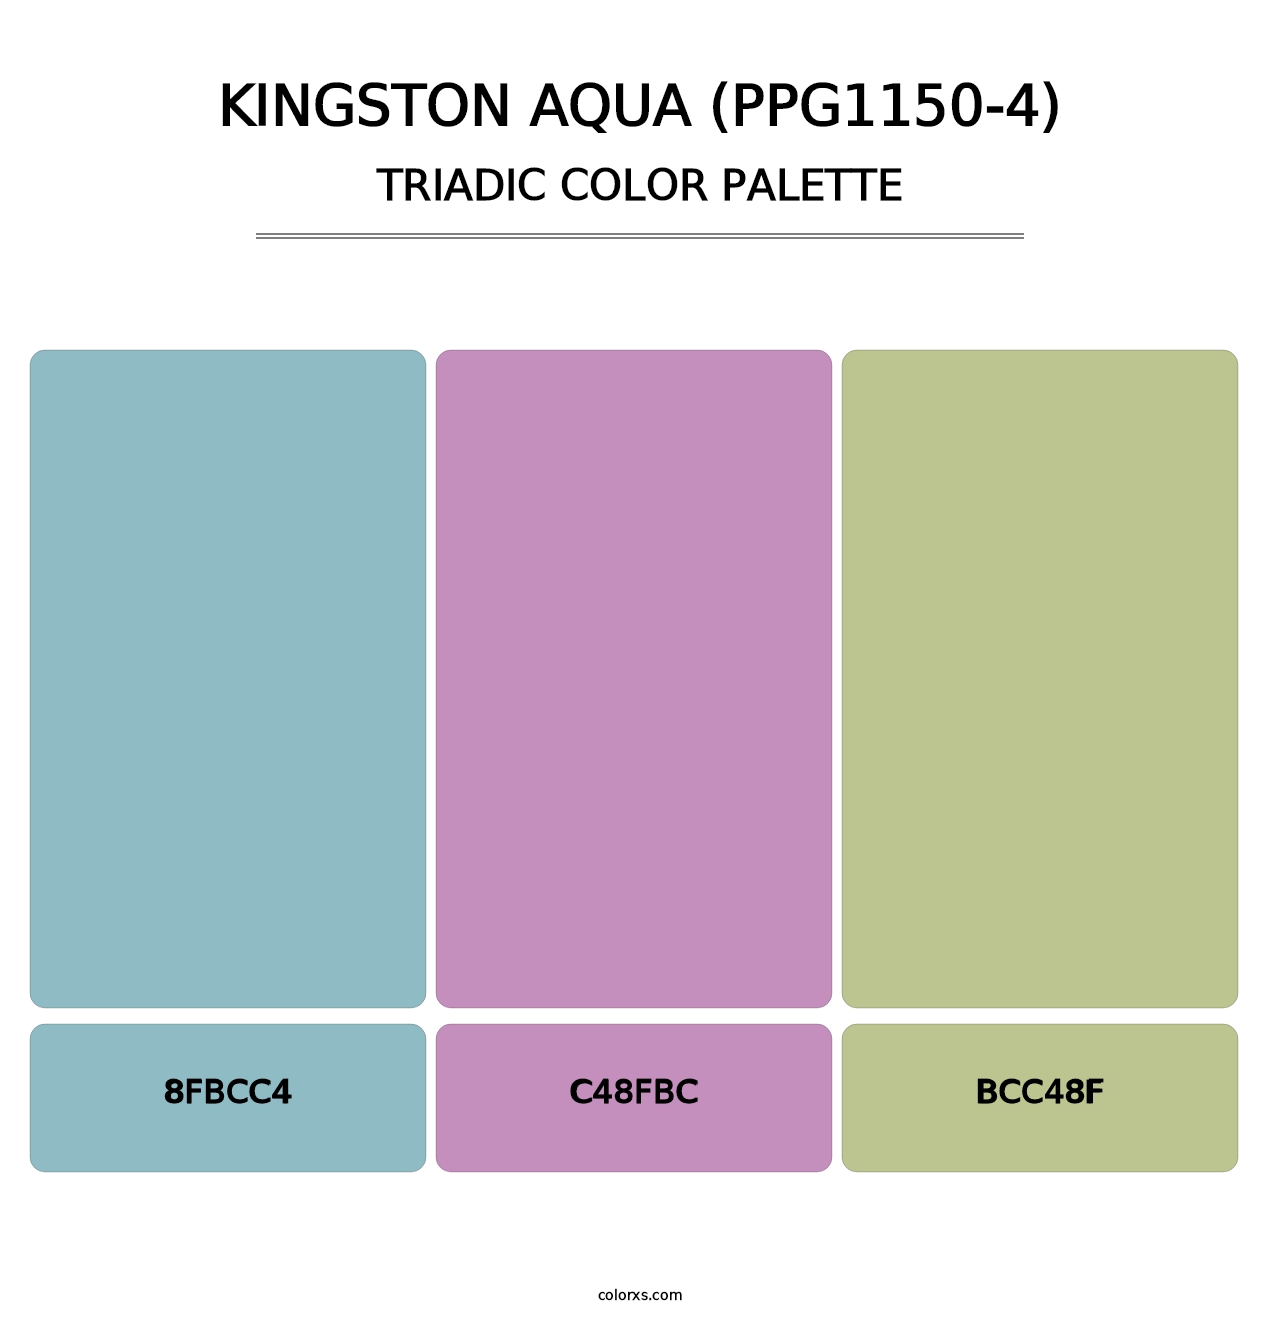 Kingston Aqua (PPG1150-4) - Triadic Color Palette